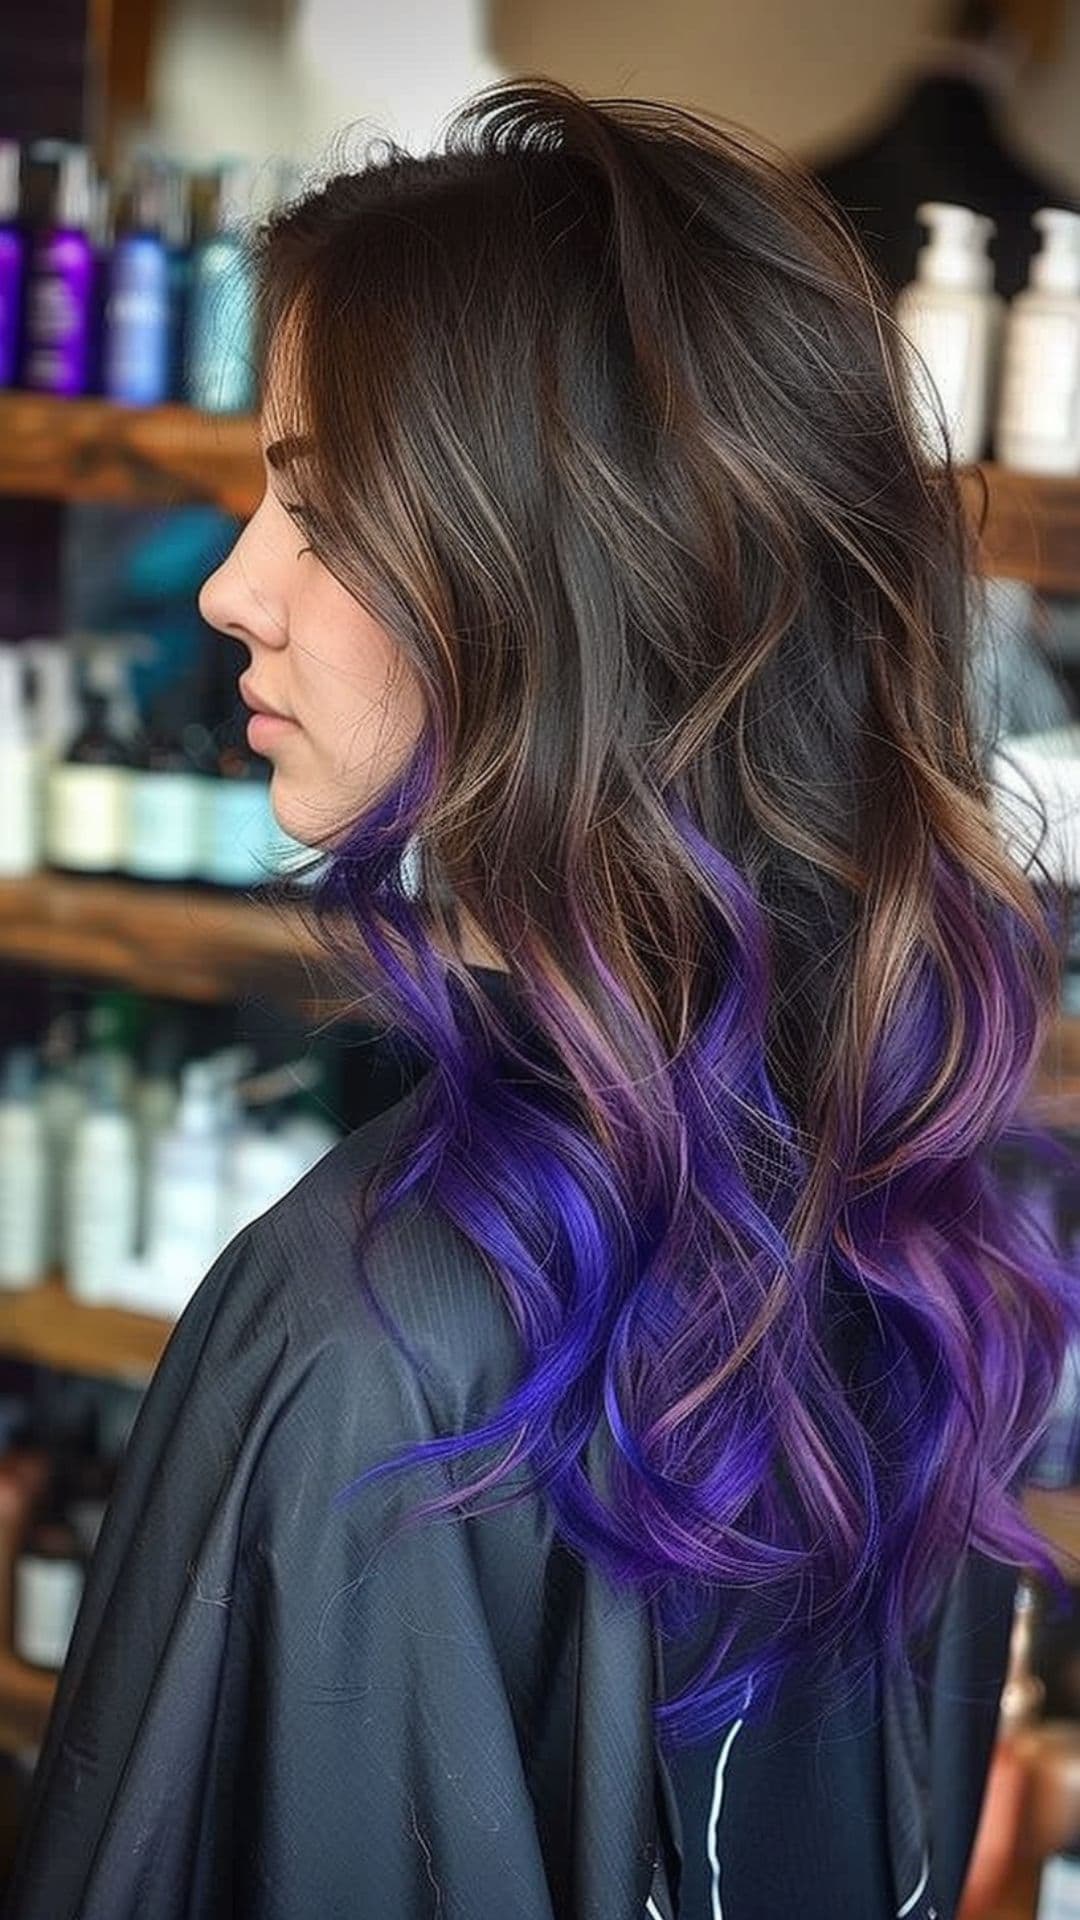 A woman modelling a violet ombre hair color.